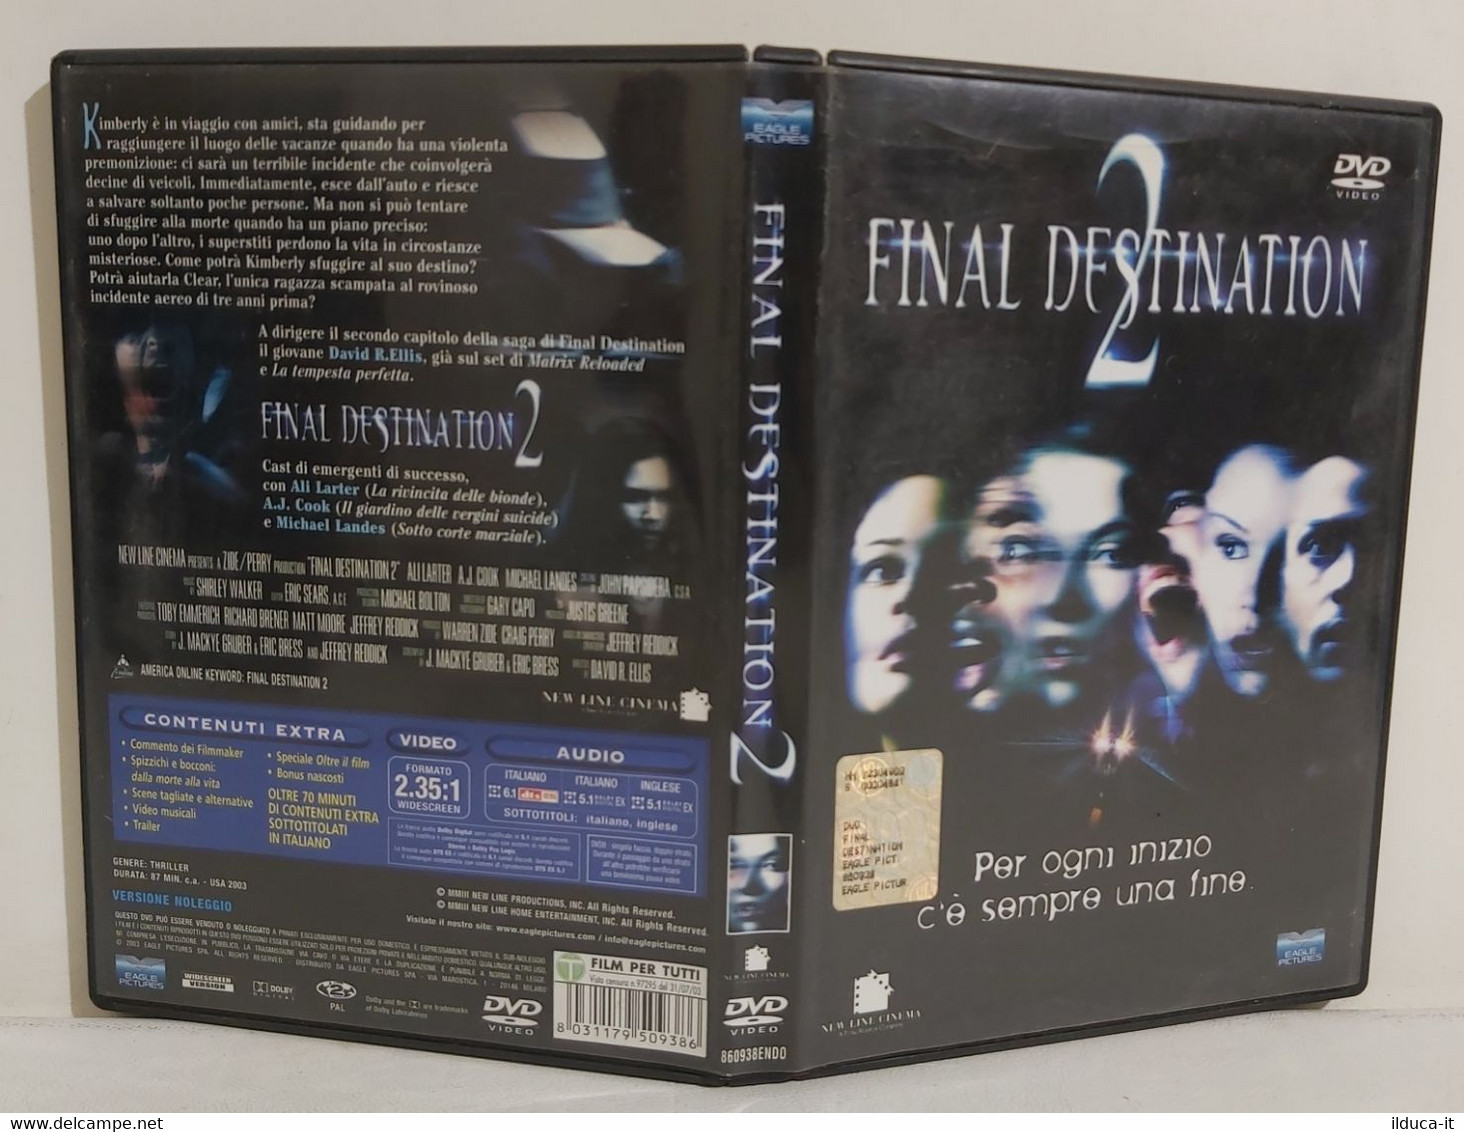 I104826 DVD - FINAL DESTINATION 2 (2003) - David R. Ellis / Ali Larter - Horror